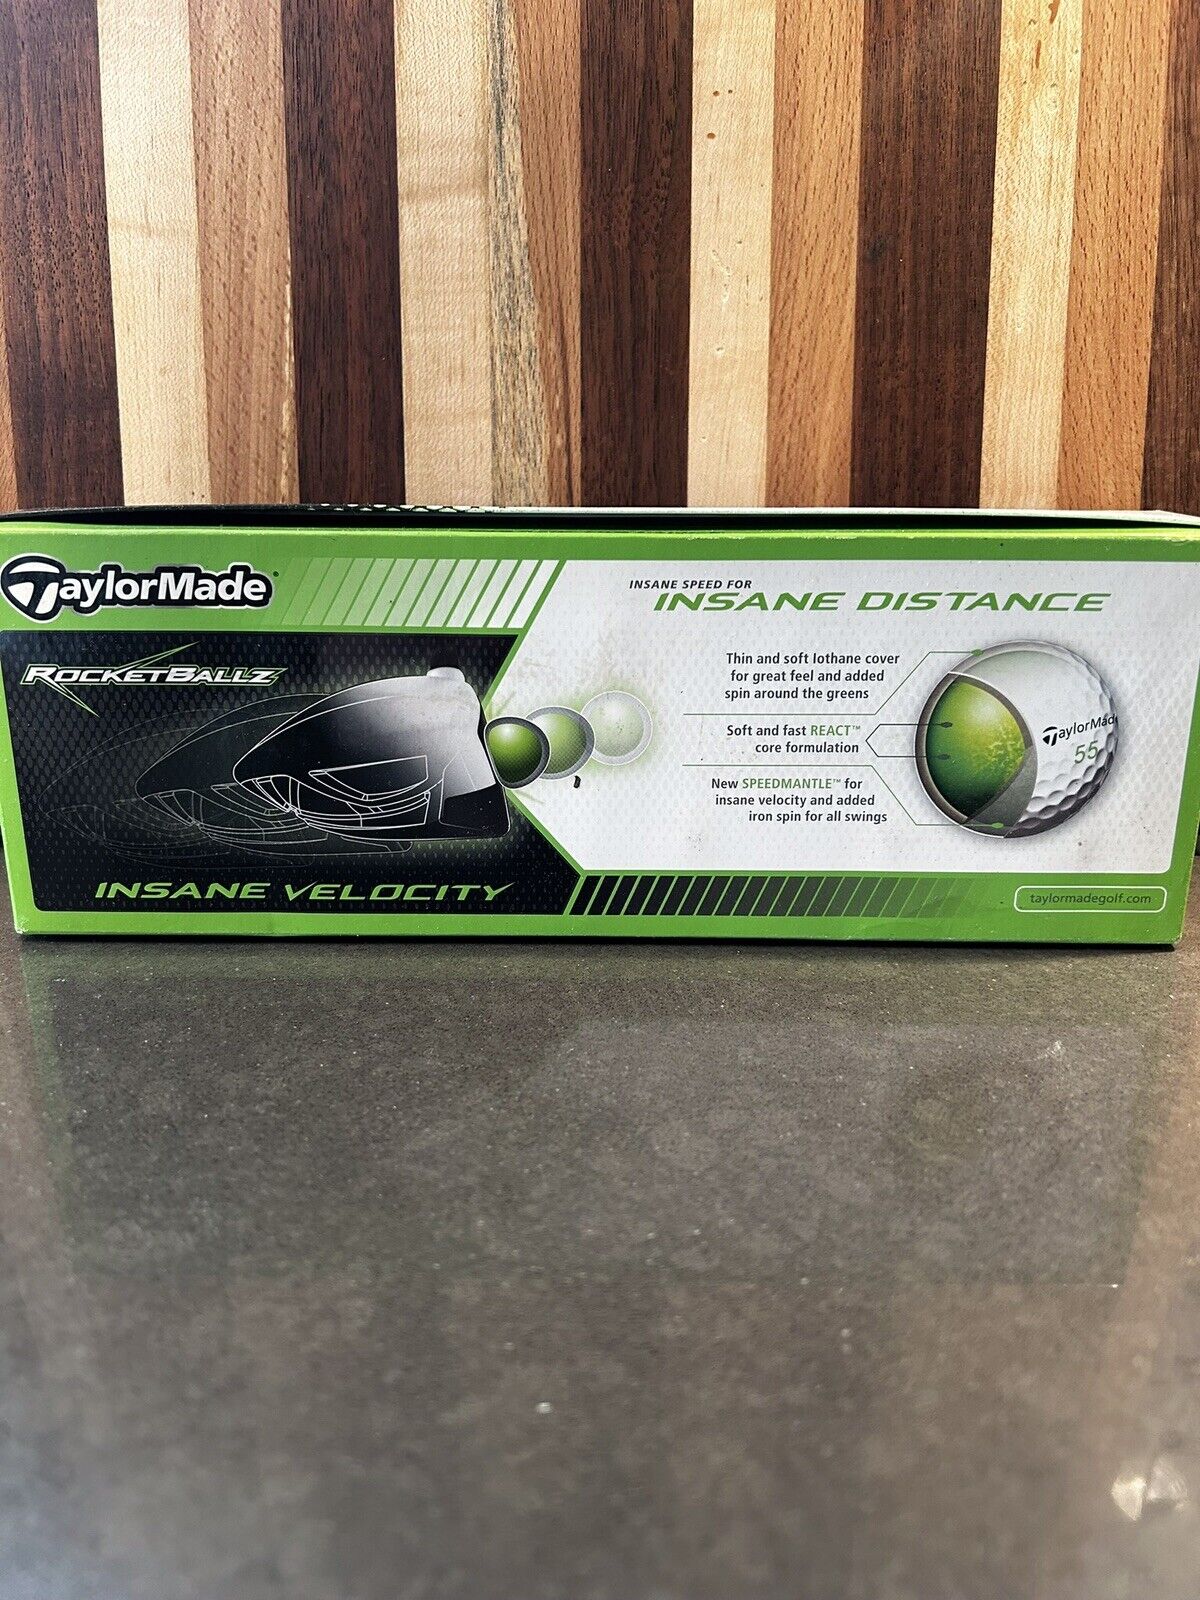 RocketBallz TaylorMade Golf Balls Insane Velocity 3 Sleeves